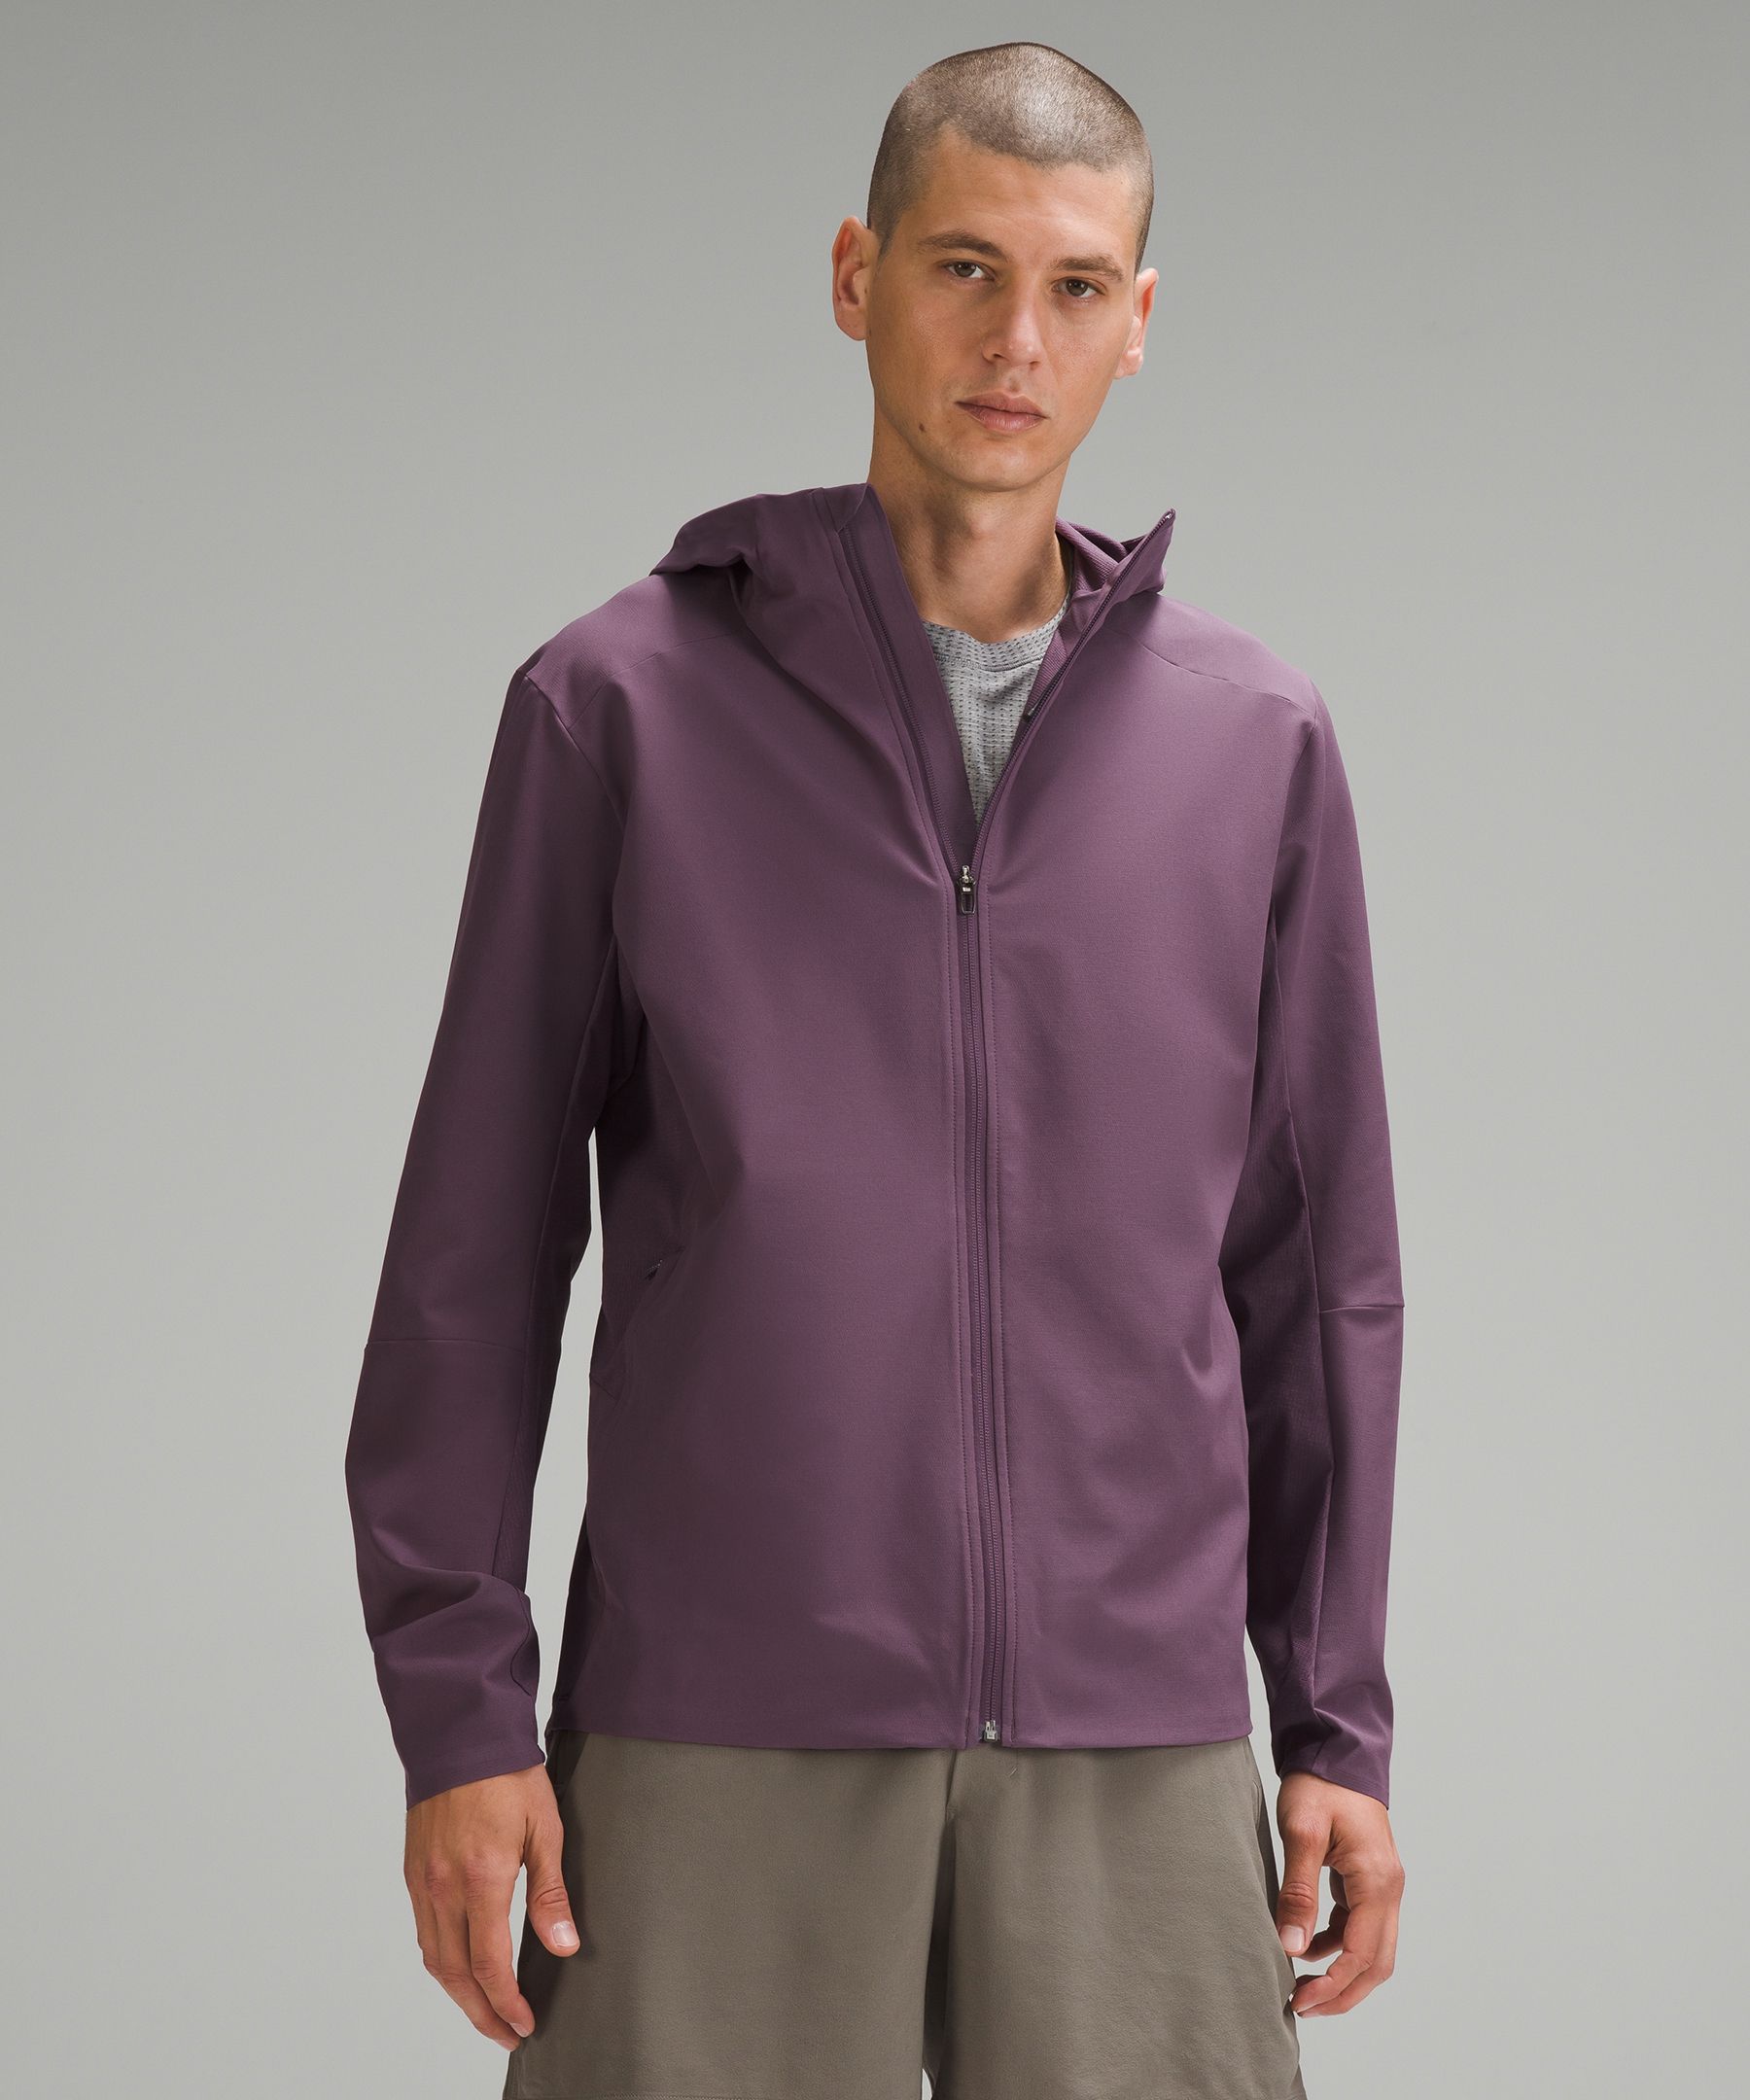 Warp Light Packable Jacket | Men's Coats & Jackets | lululemon